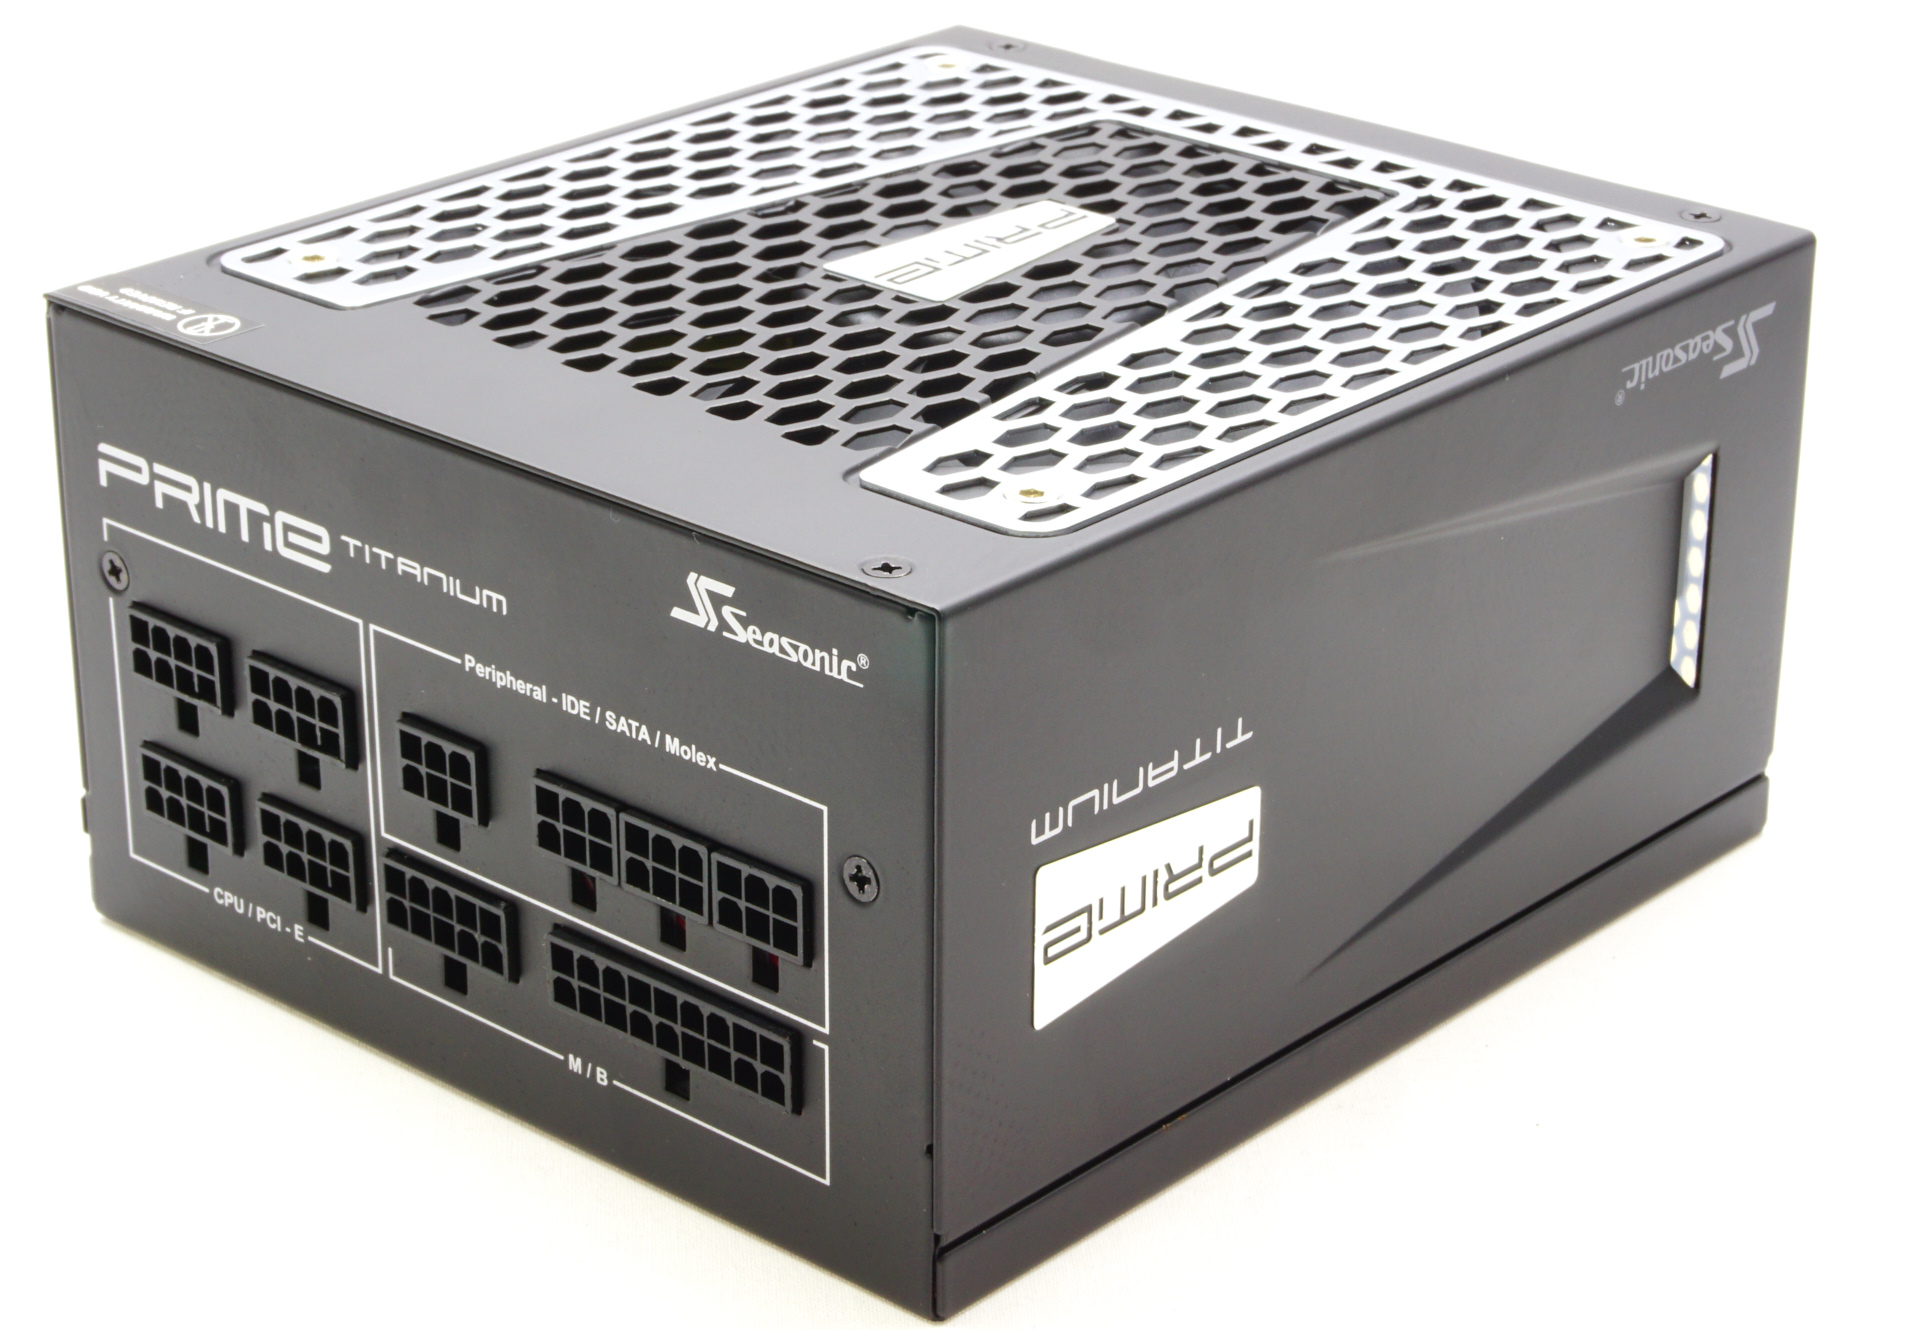 Seasonic Prime Ultra 750W ATX Black power supply unit